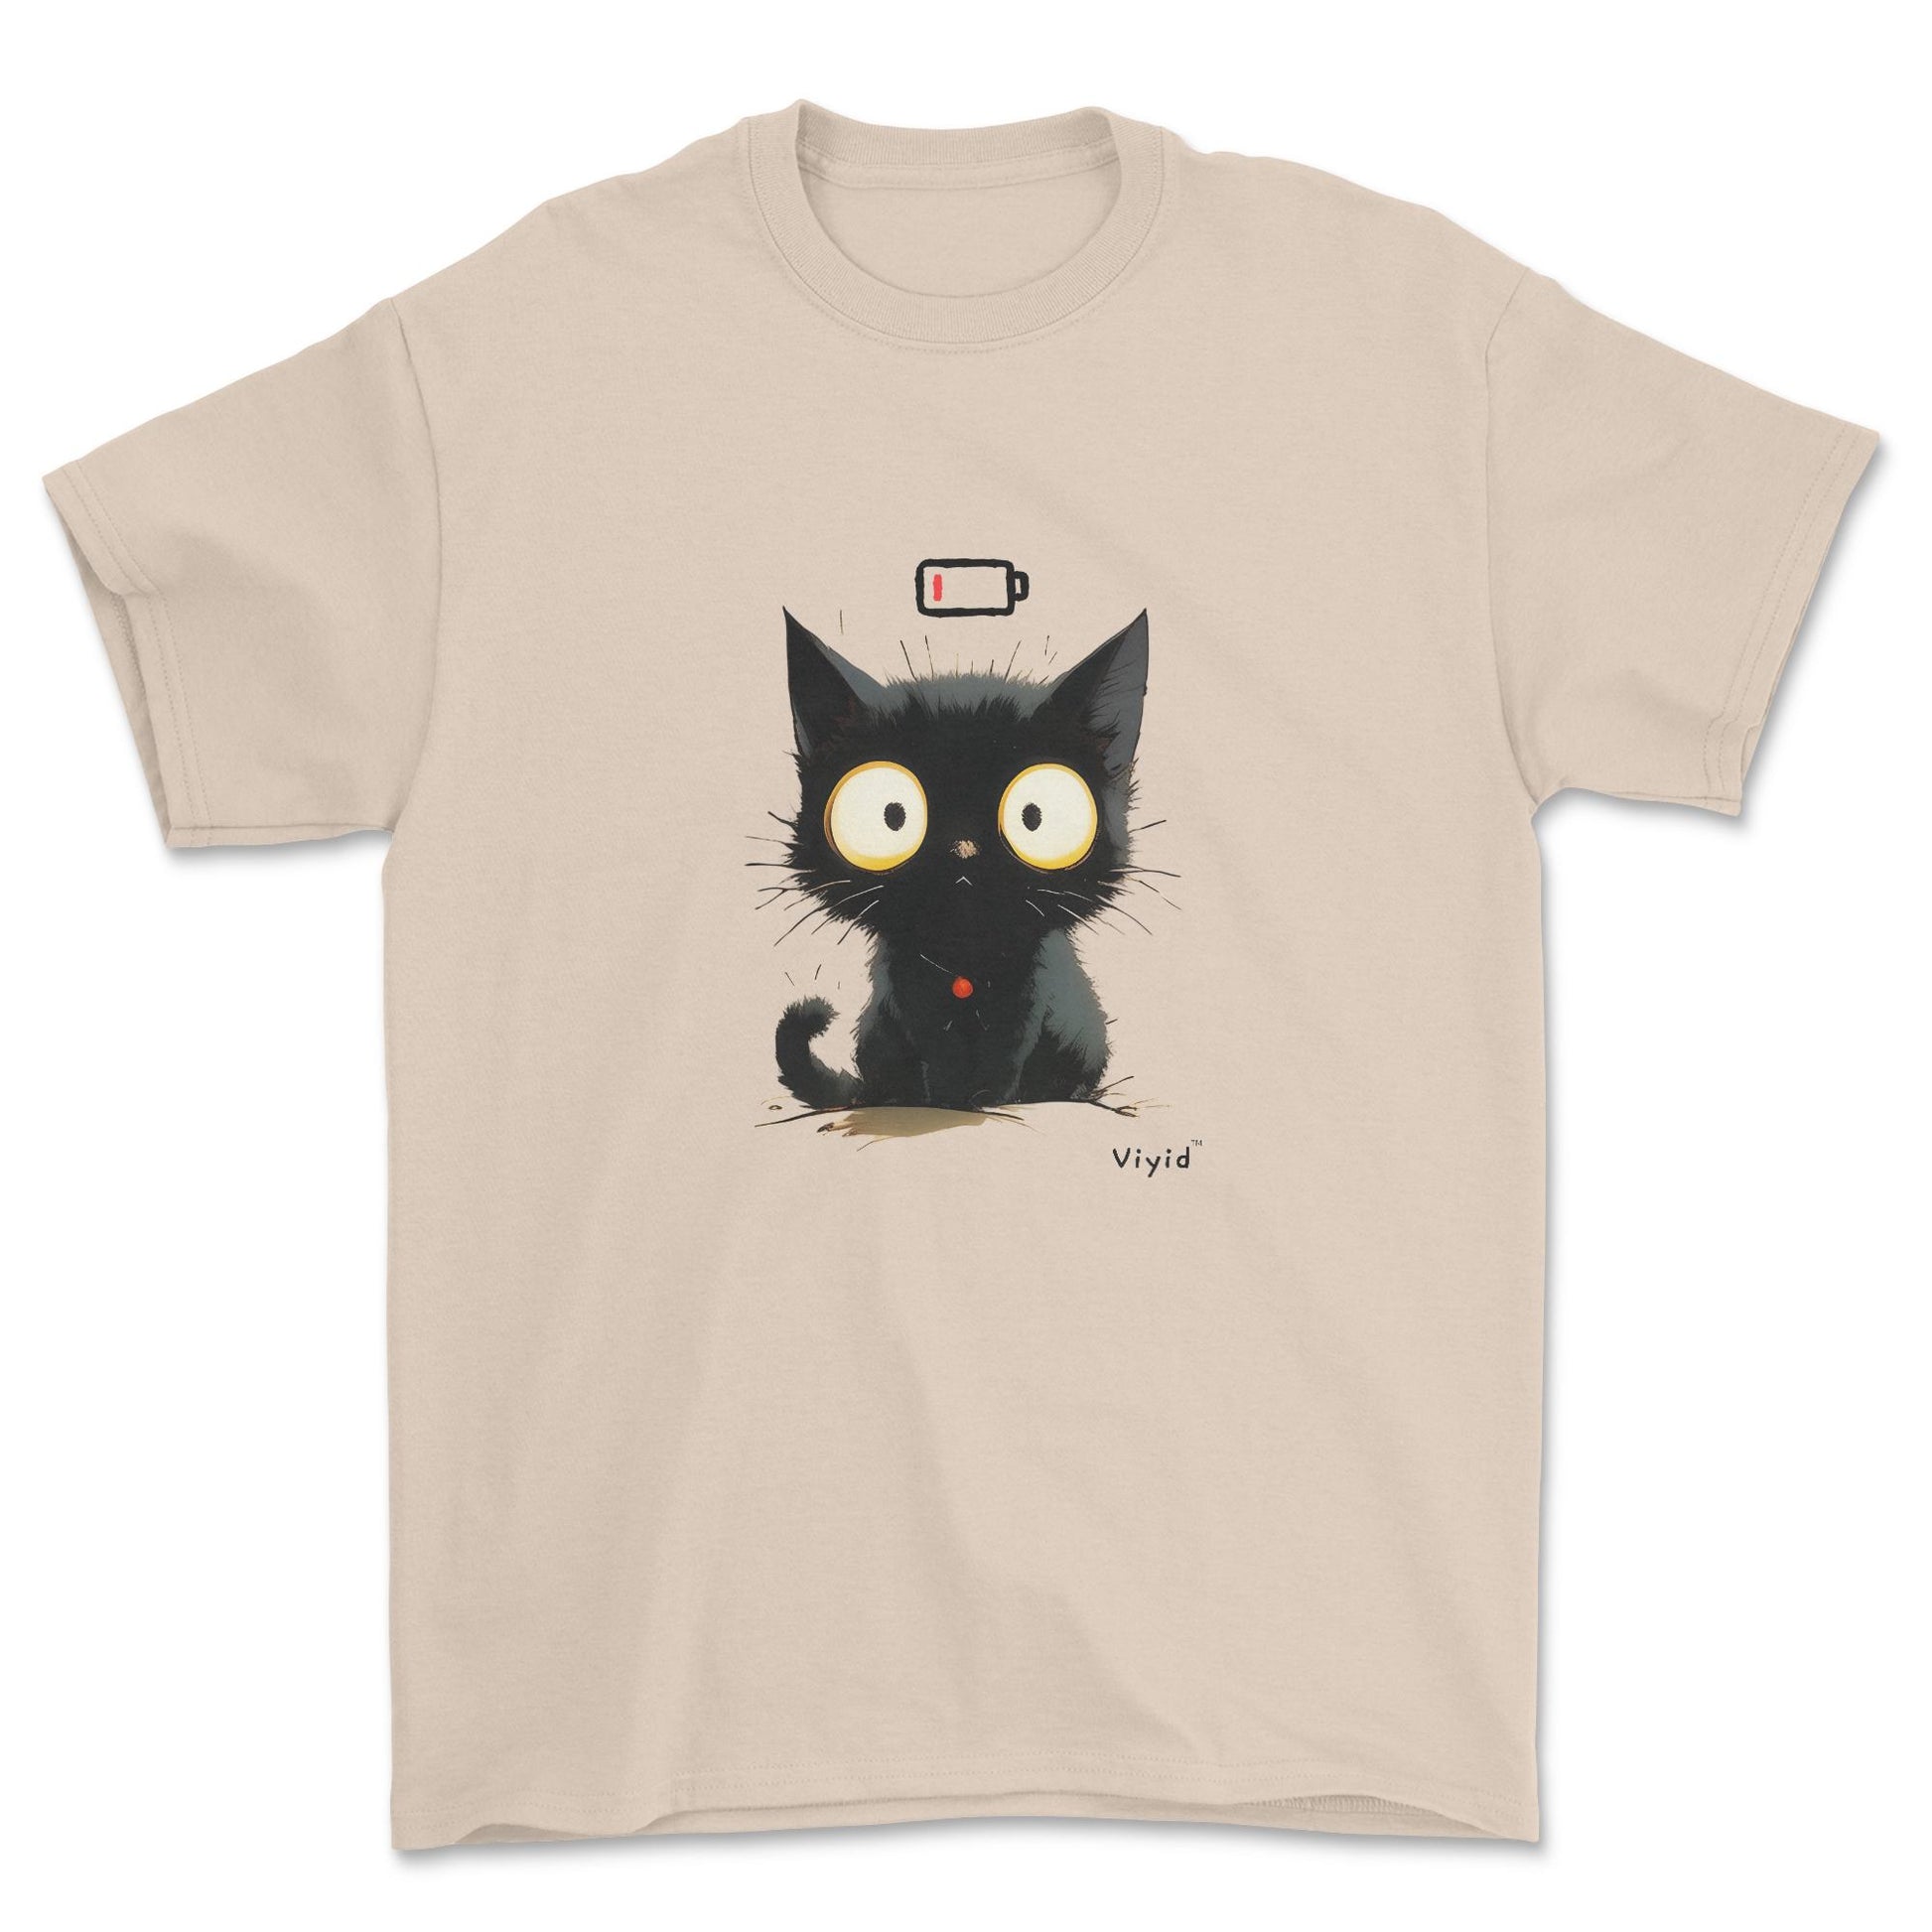 Low battery black cat adult t-shirt sand